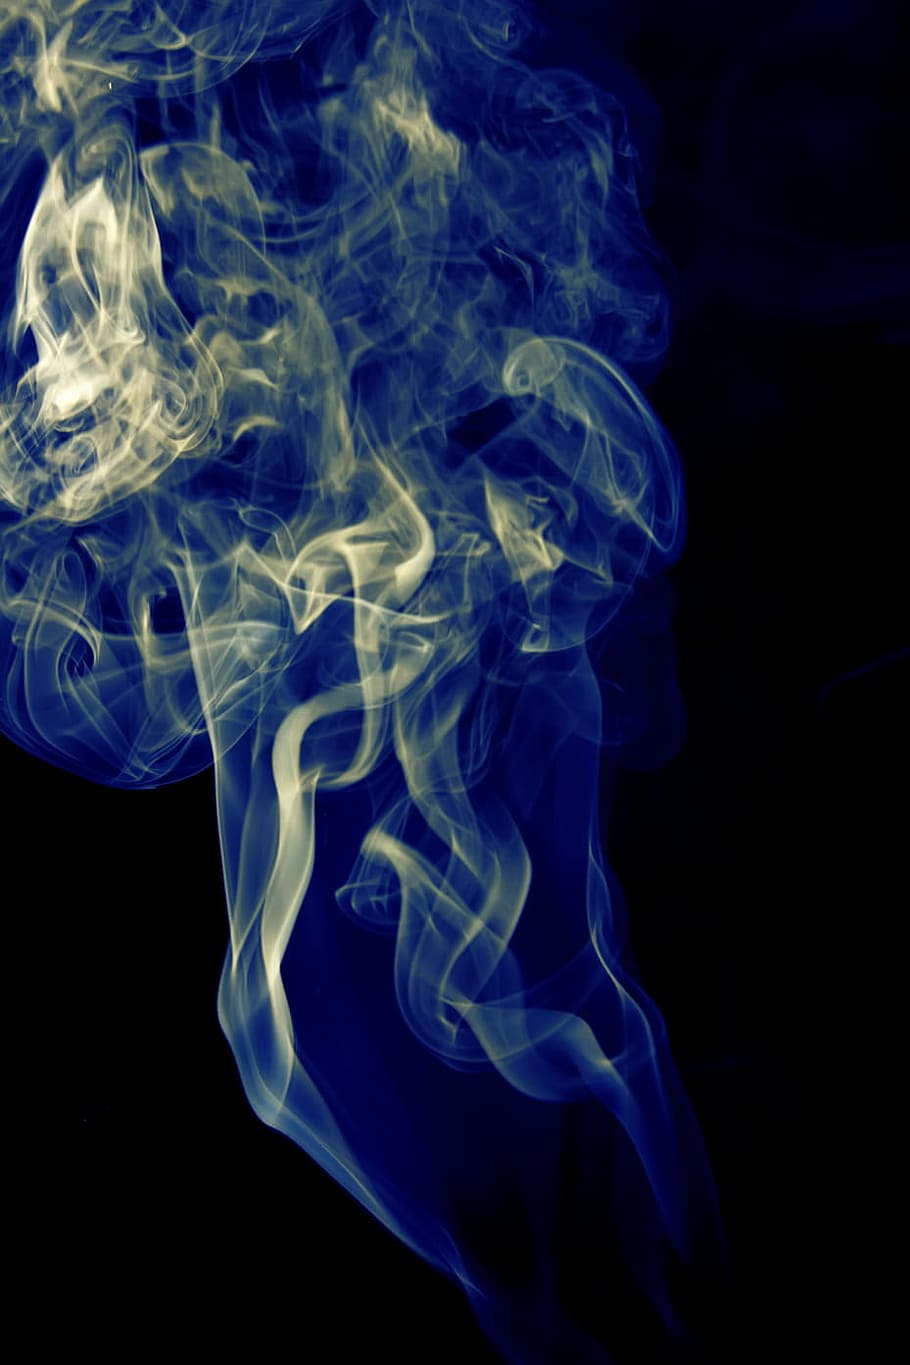 azul, fundo, fumaça, isolado, preto, suave, forma, abstrato, onda, perfumado